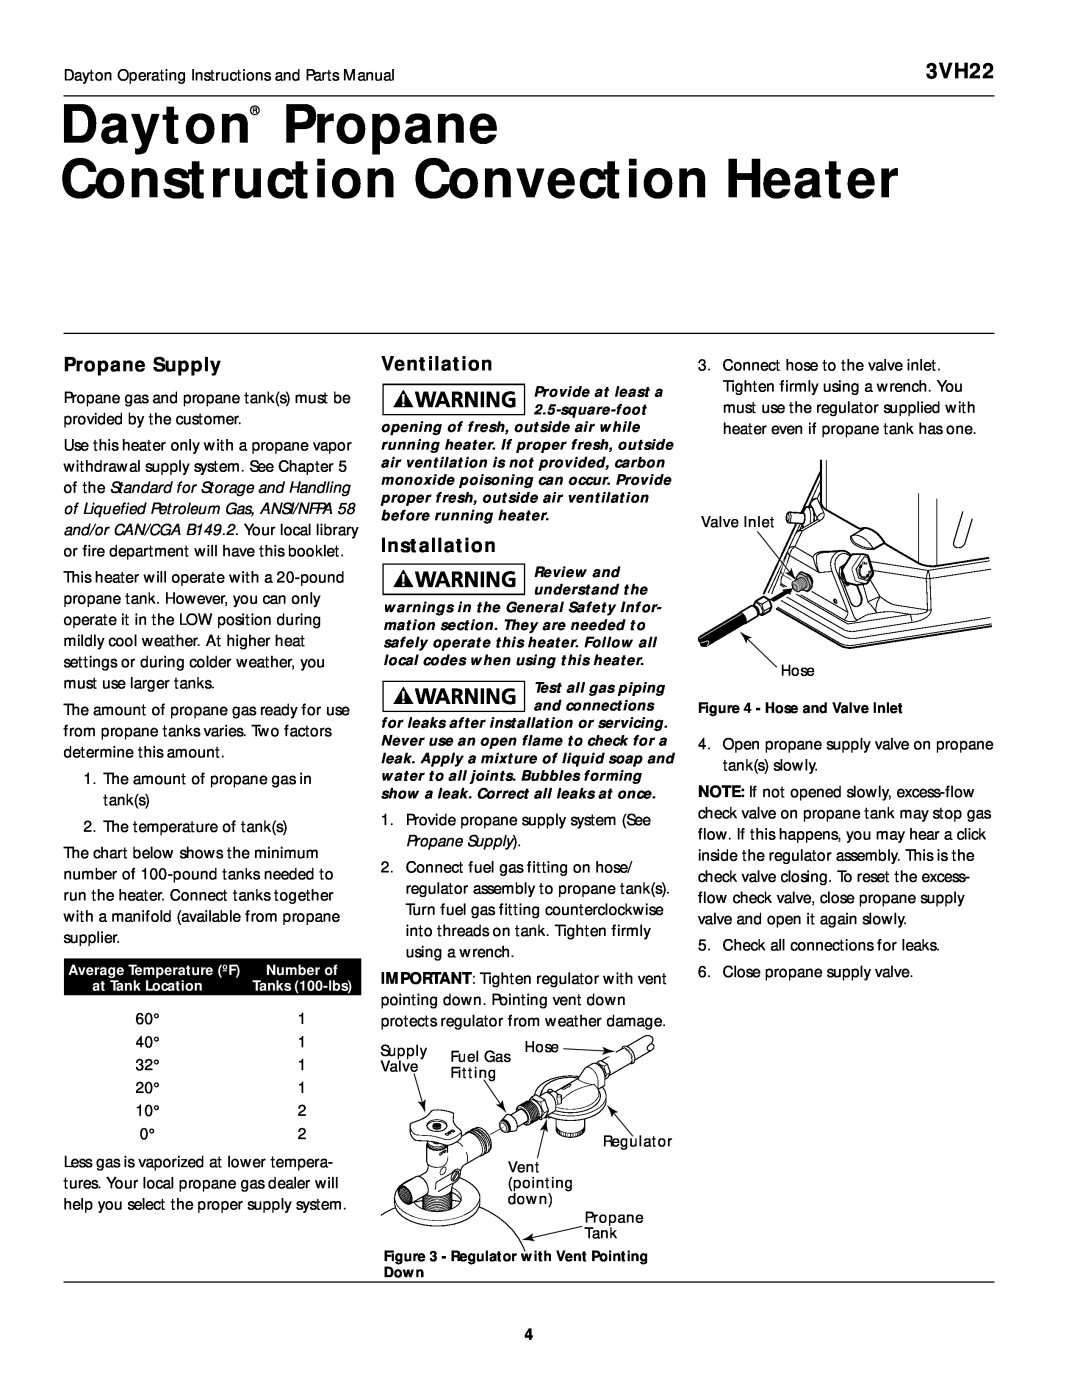 Desa 3VH22 instruction manual Dayton Propane Construction Convection Heater, Propane Supply, Ventilation, Installation 